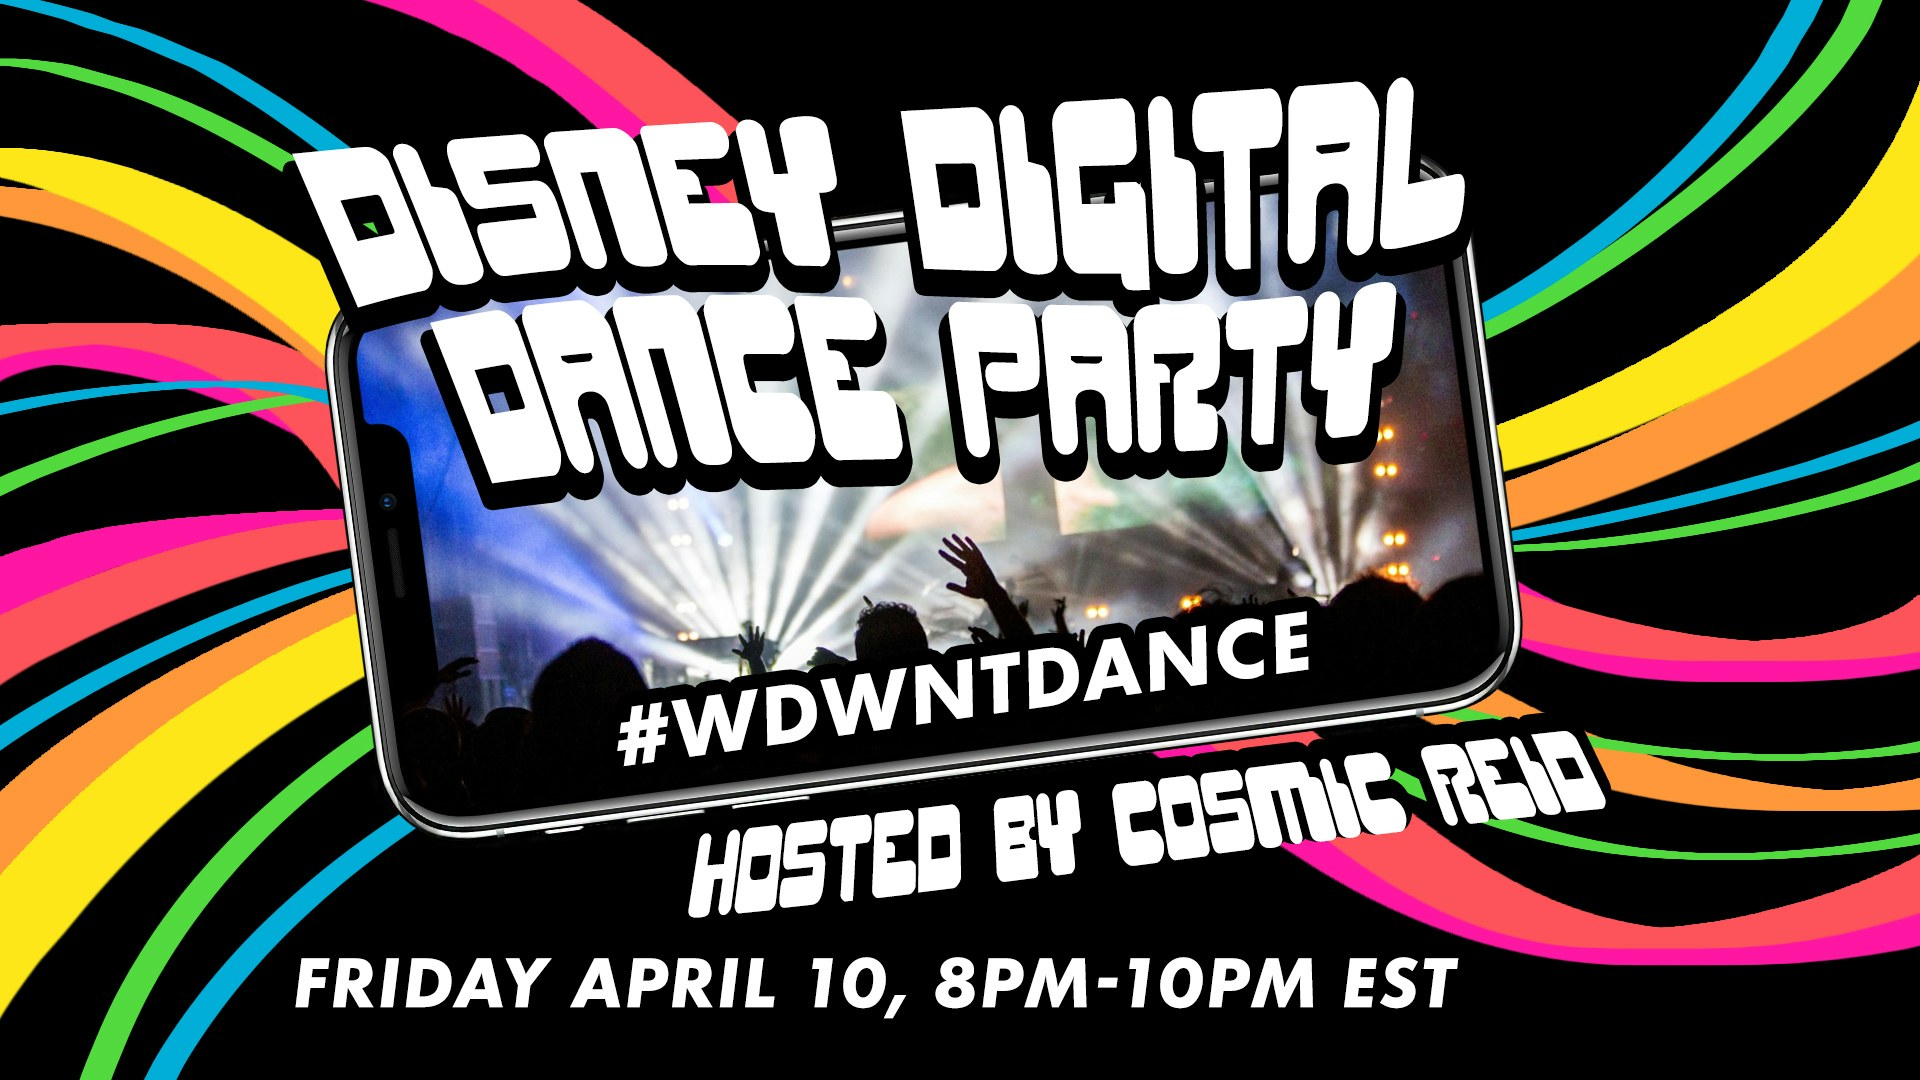 disney digital dance party.jpg?auto=compress%2Cformat&ixlib=php 1.2